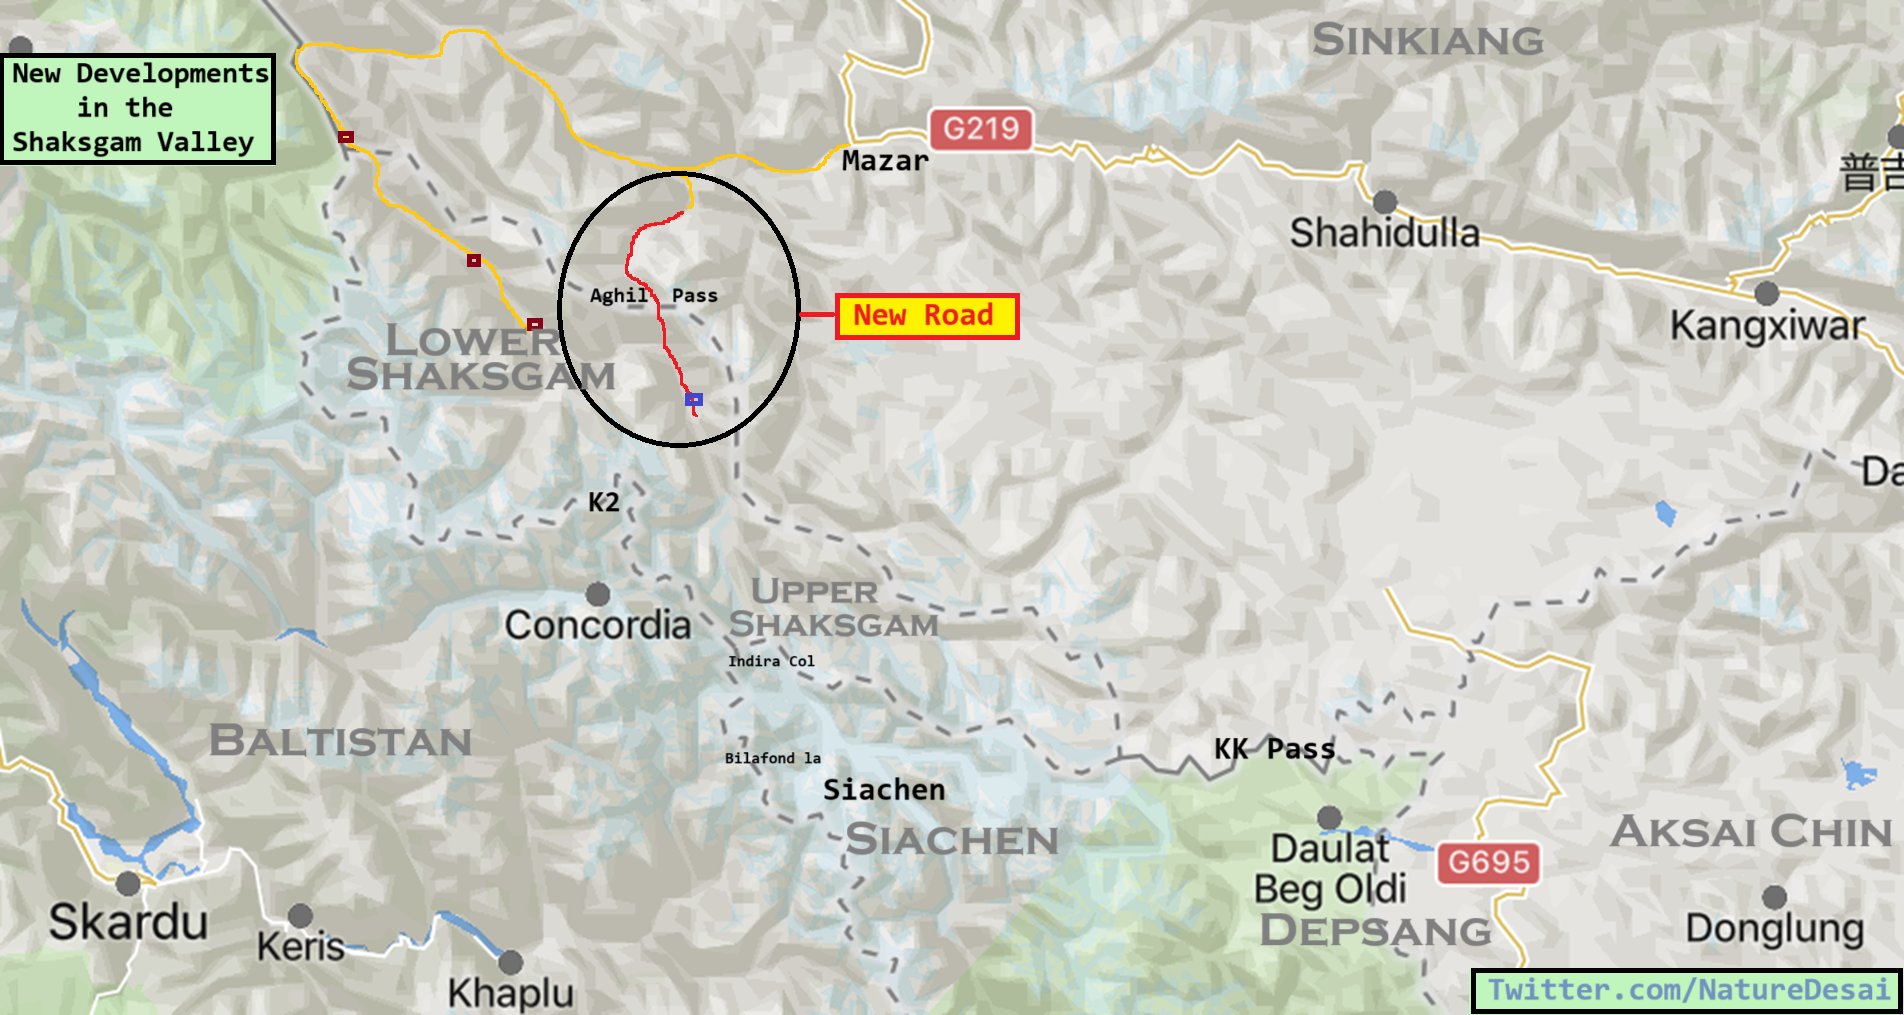 Map showing recent developments in Shaksgam valley.